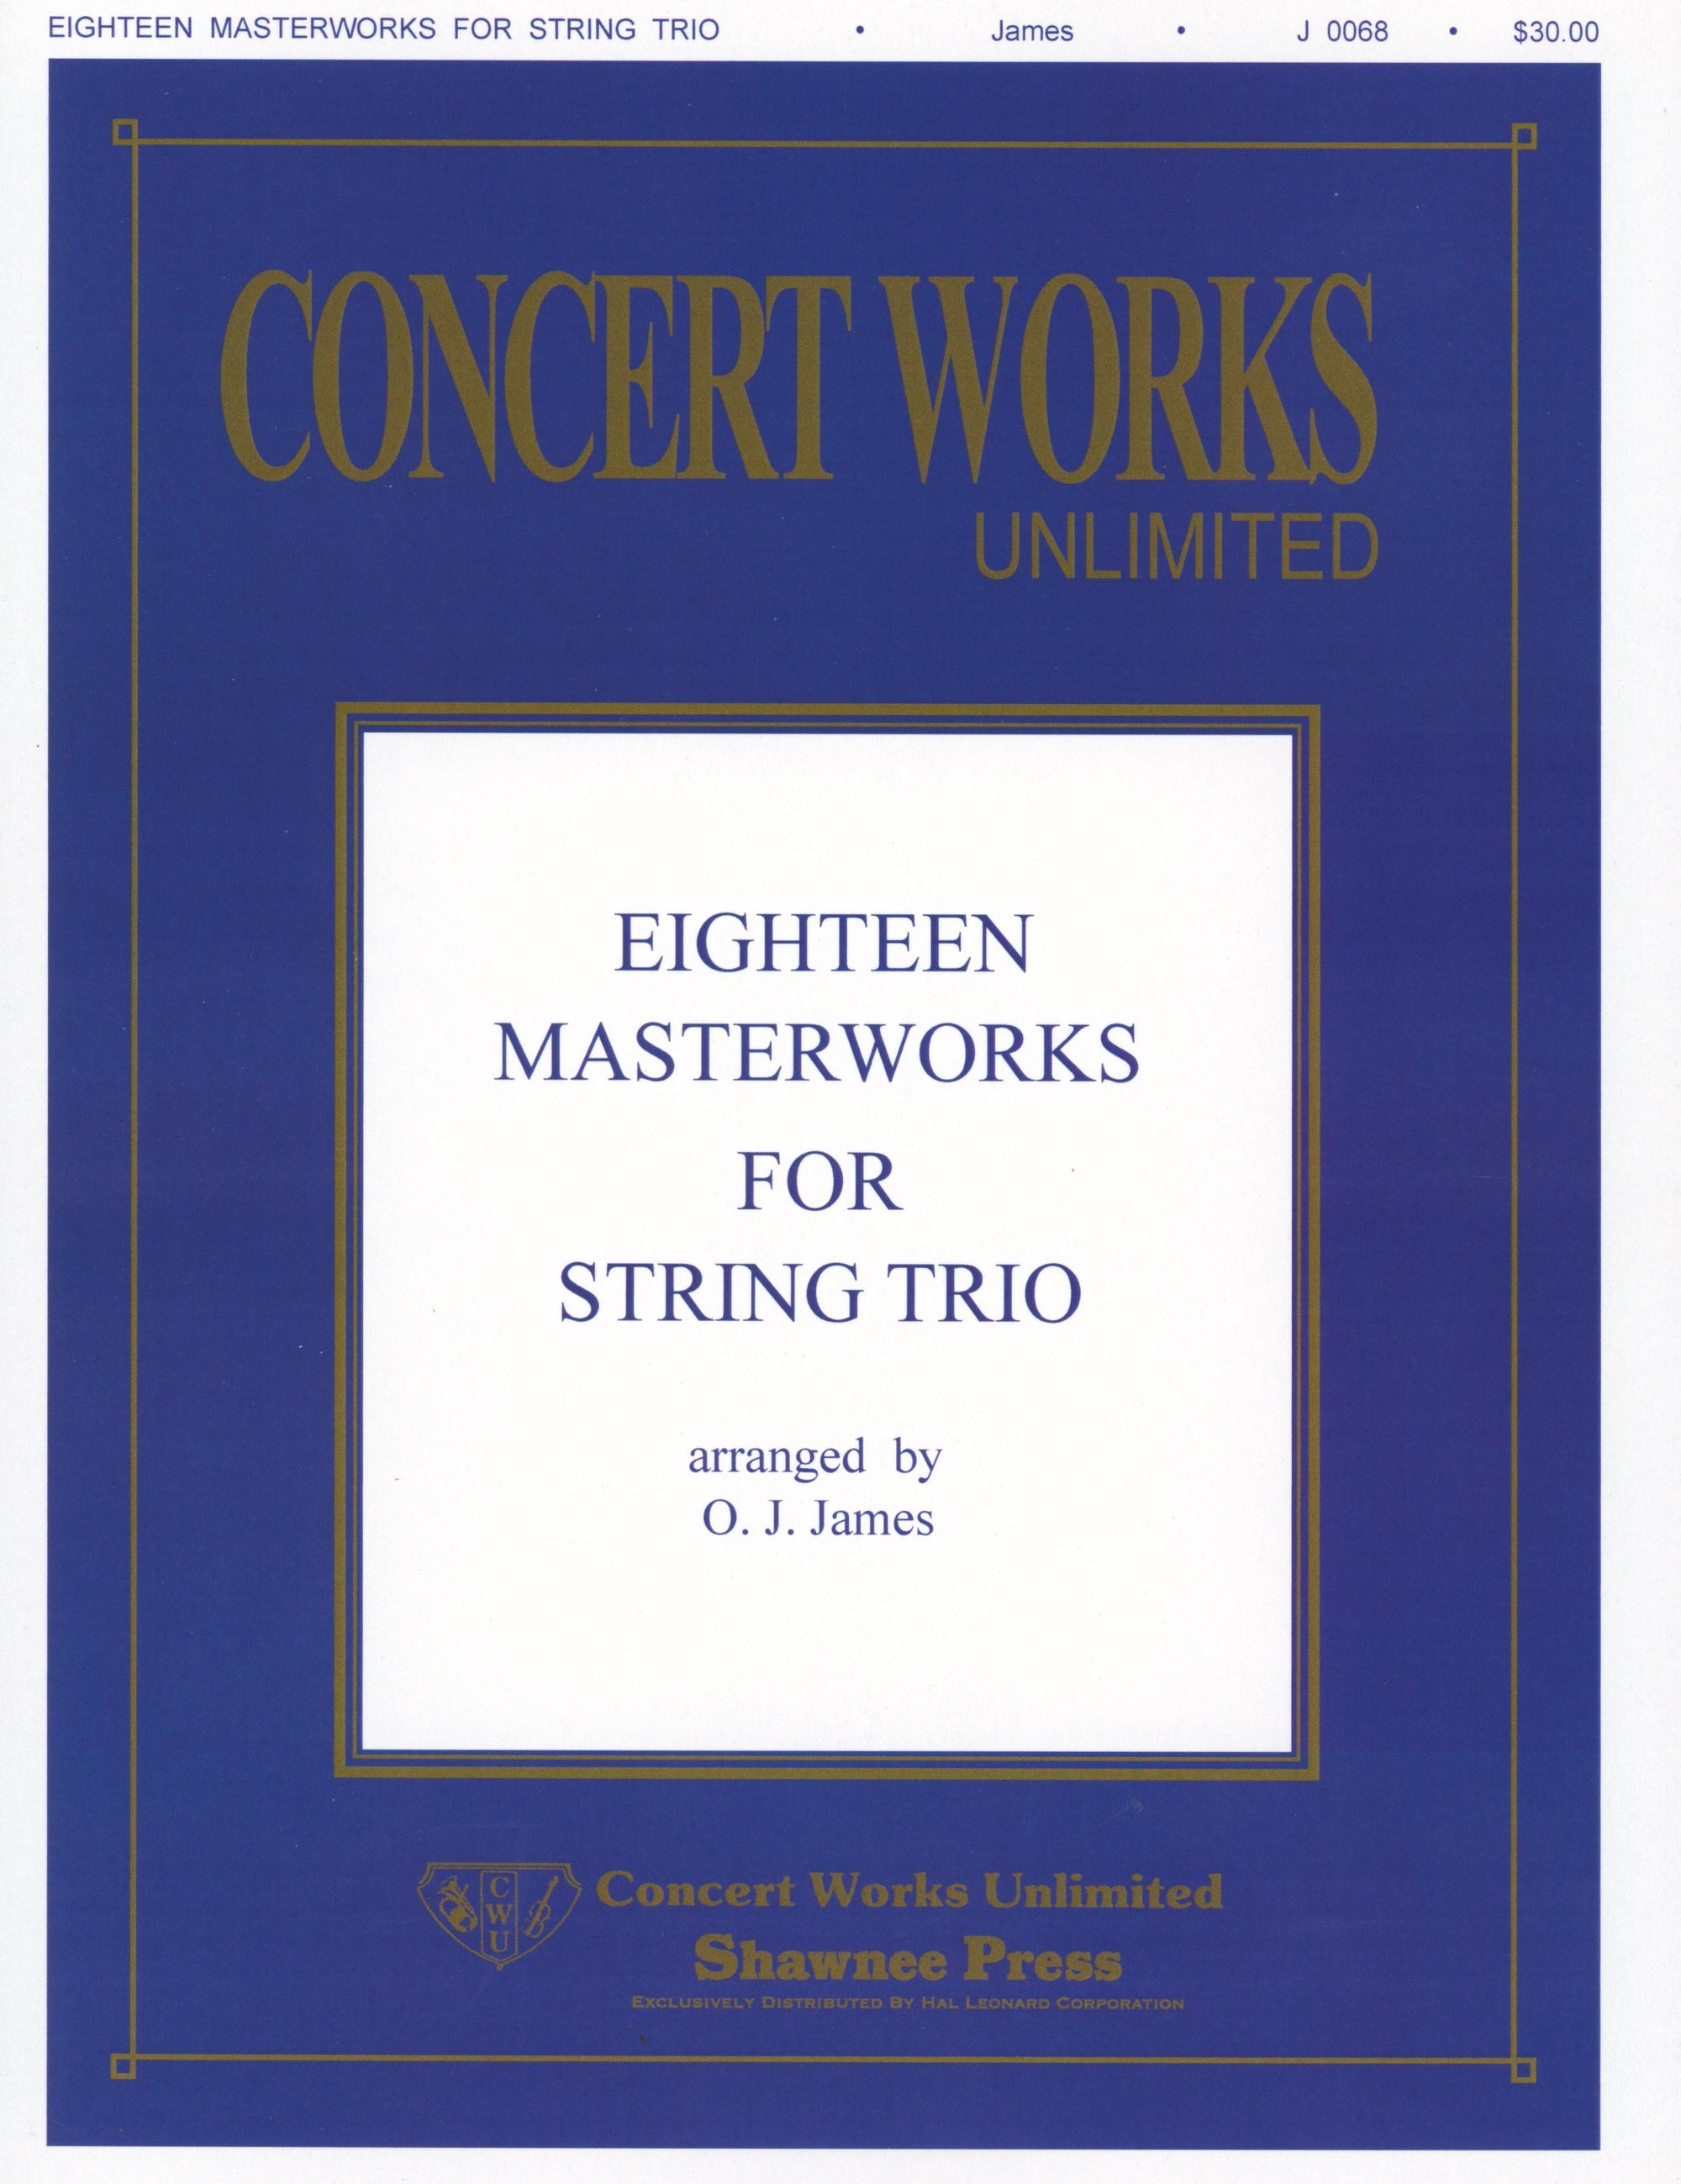 18 Masterworks for String Trio